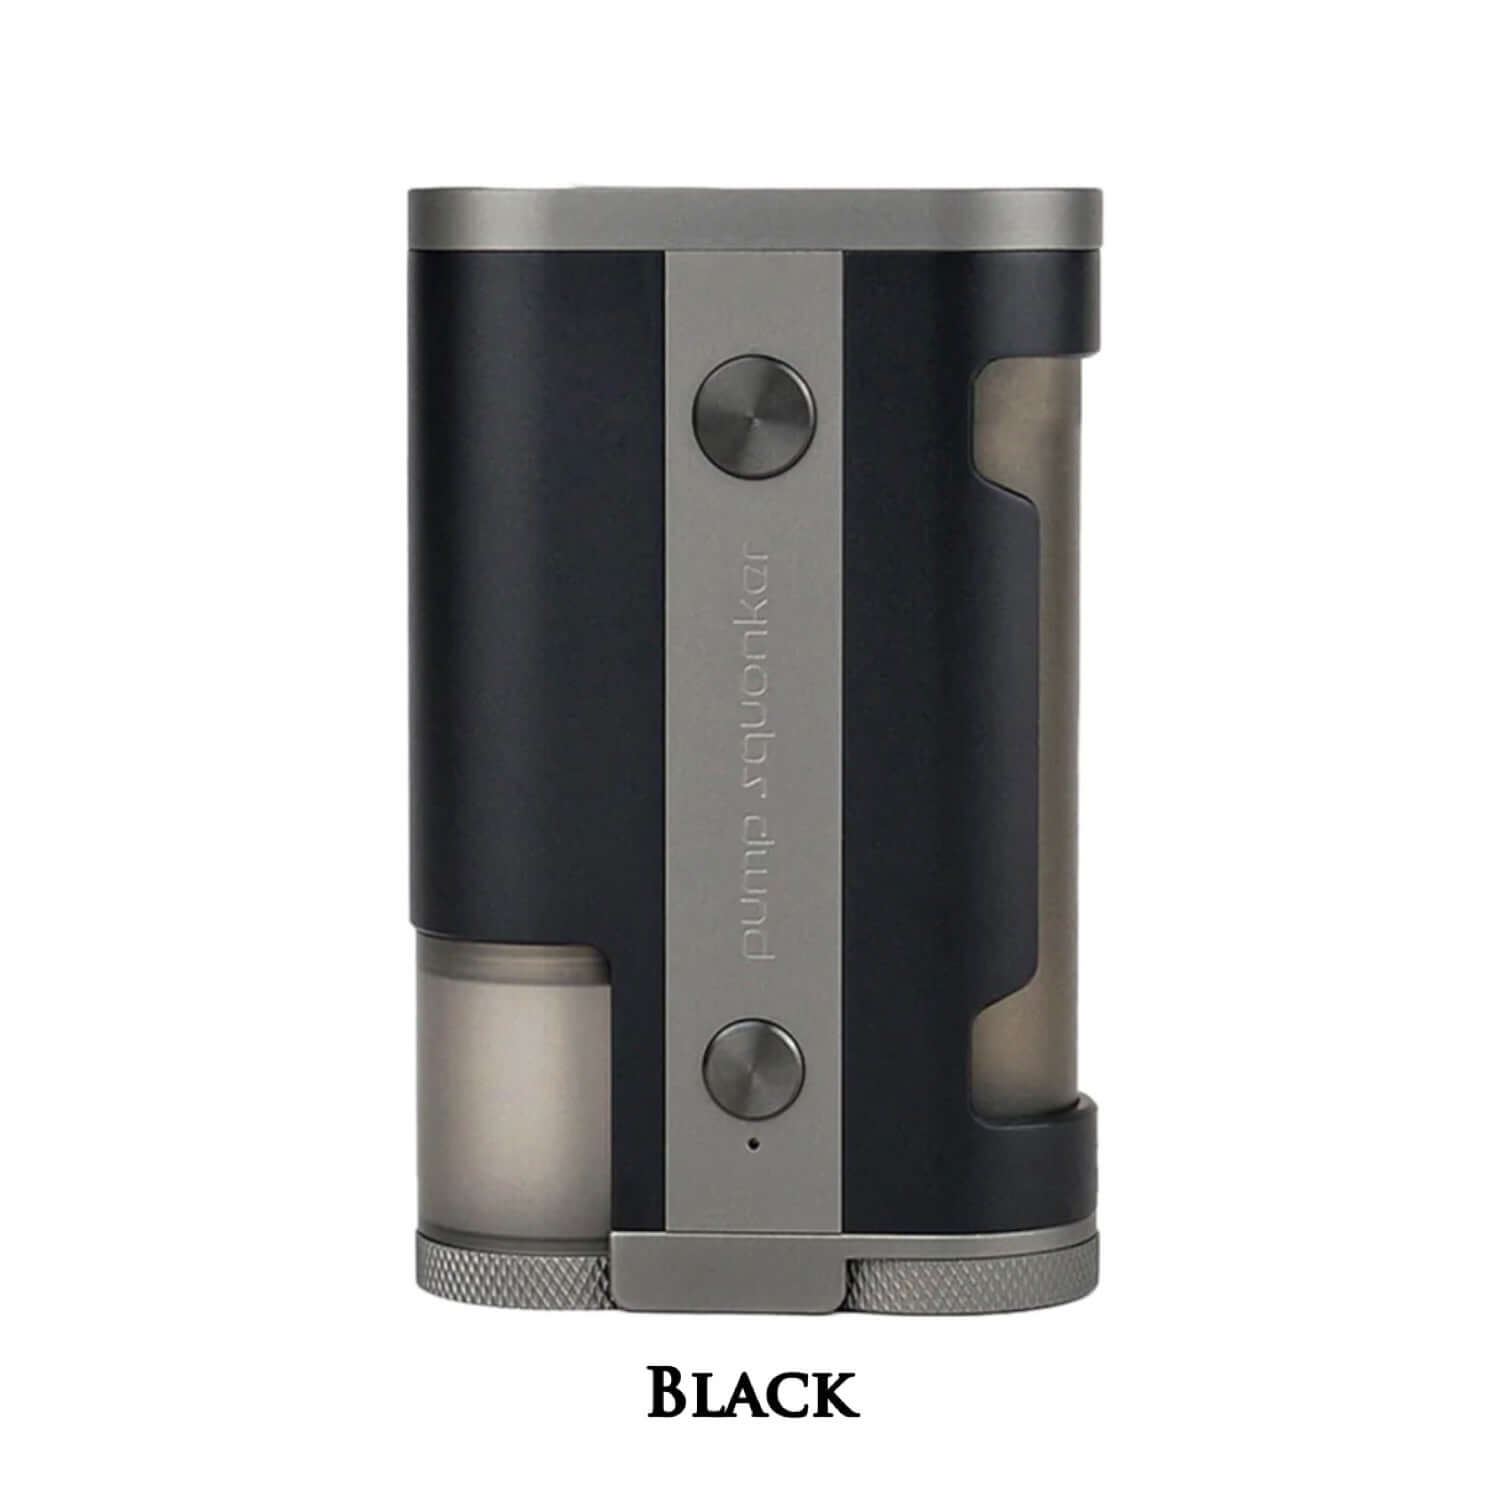 Pump Squonker in Black. Squonk Vape Mod by Dovpo X Across at LegioX Vape UK